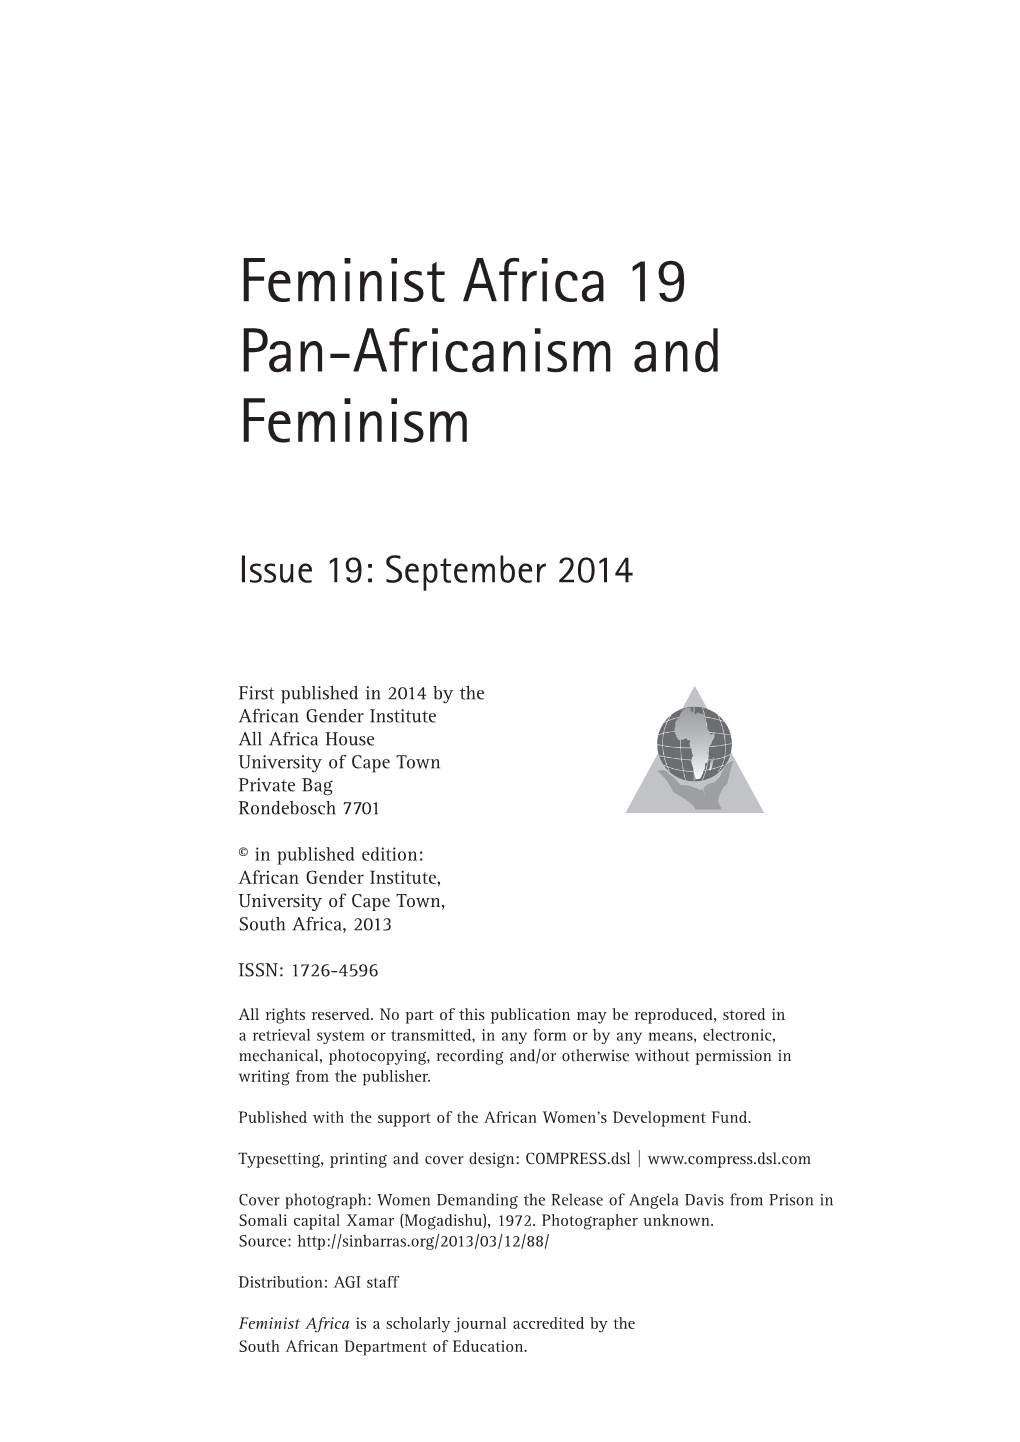 Feminist Africa 19 Pan-Africanism and Feminism